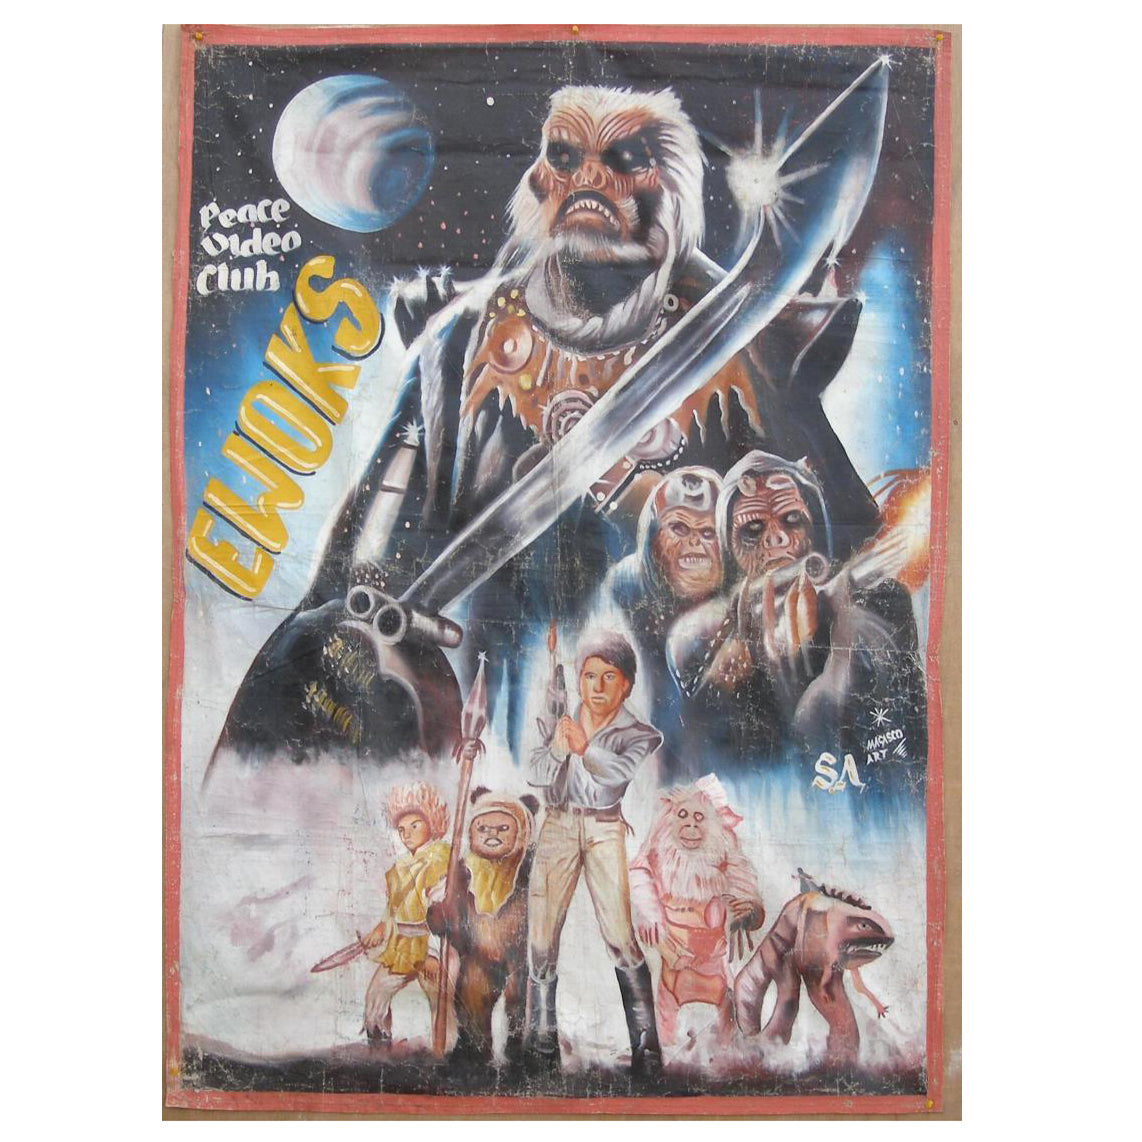 Ewoks The Battle of Endor star wars movie poster hand painted in Ghana